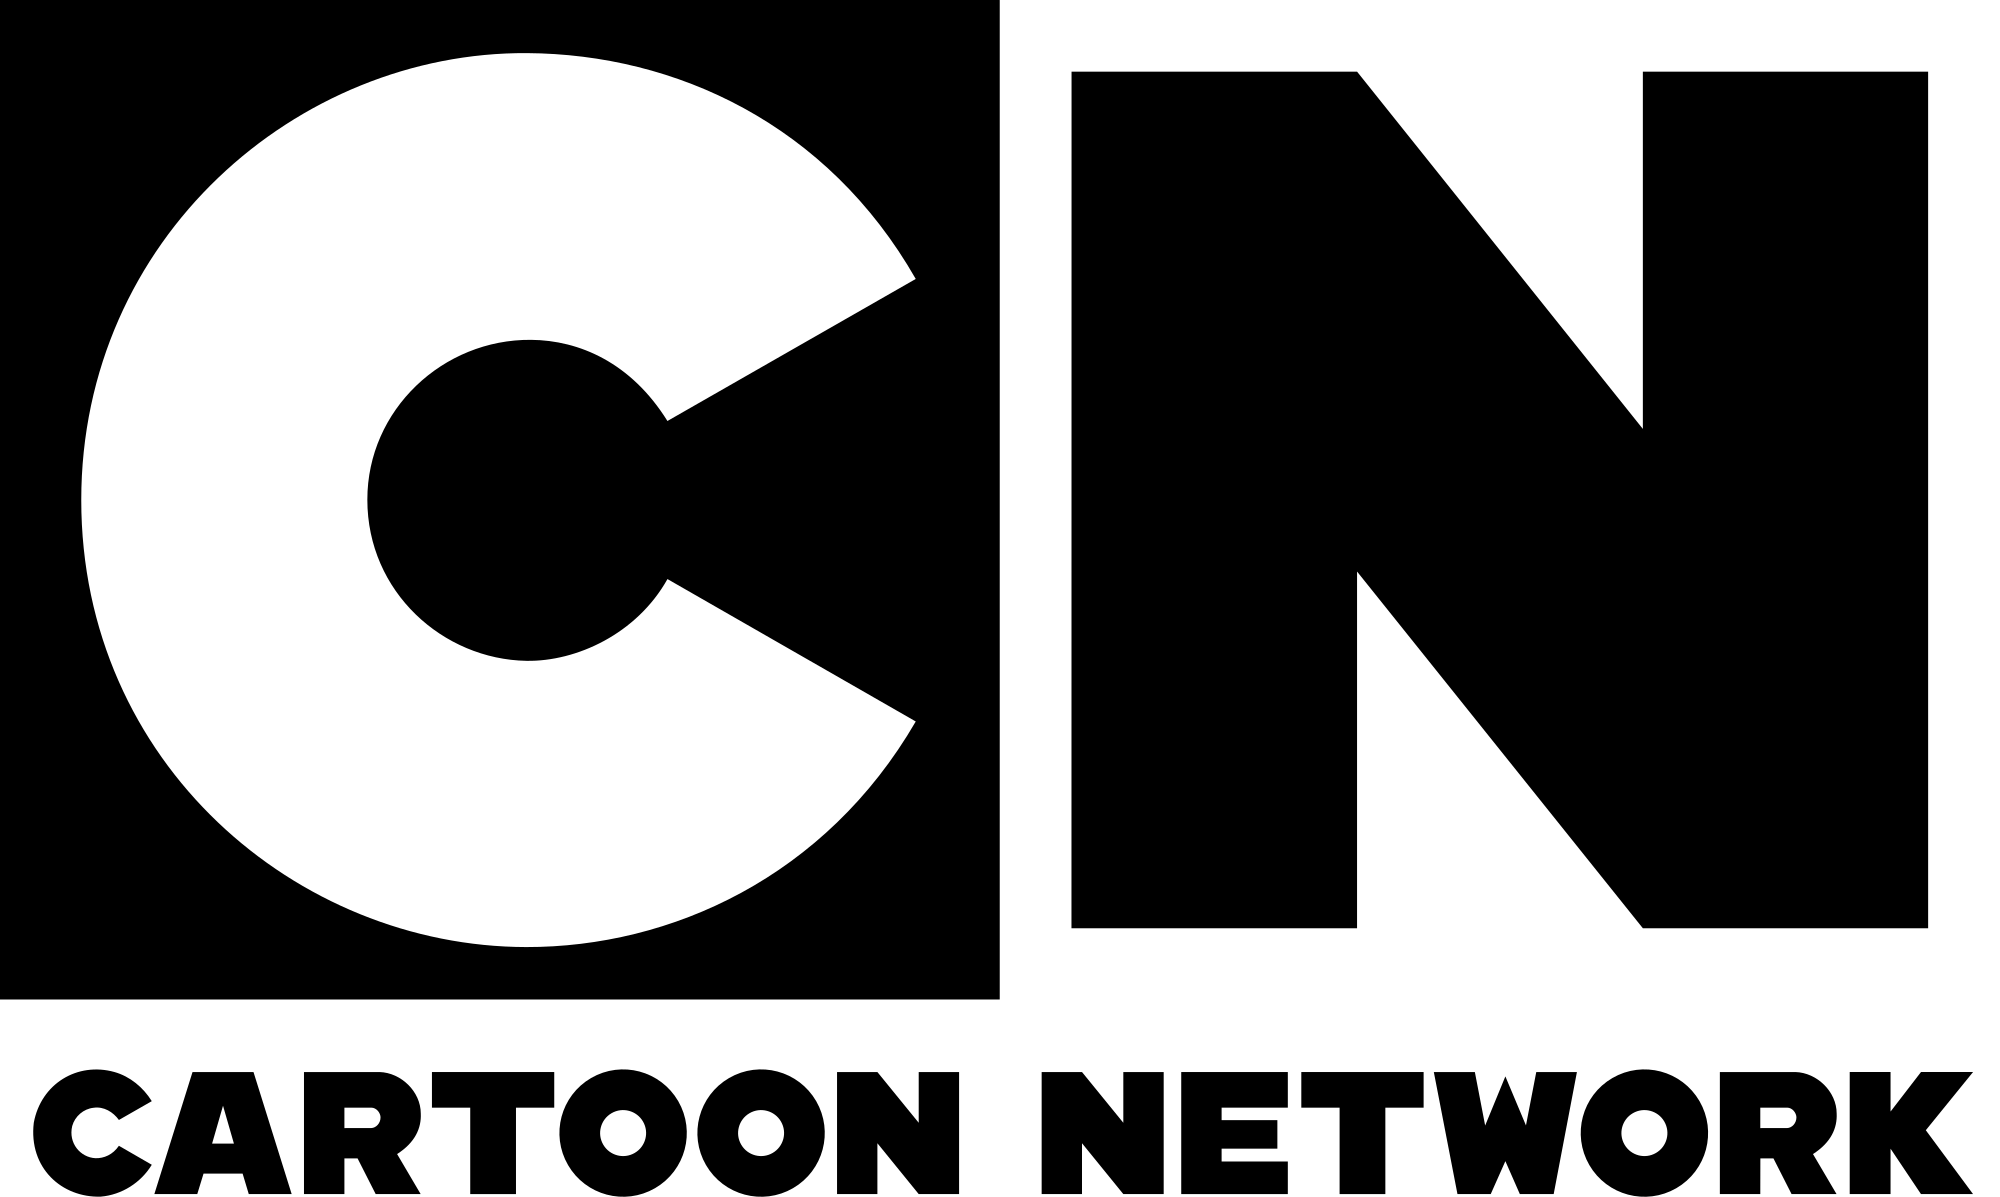 cartoon network logo.png